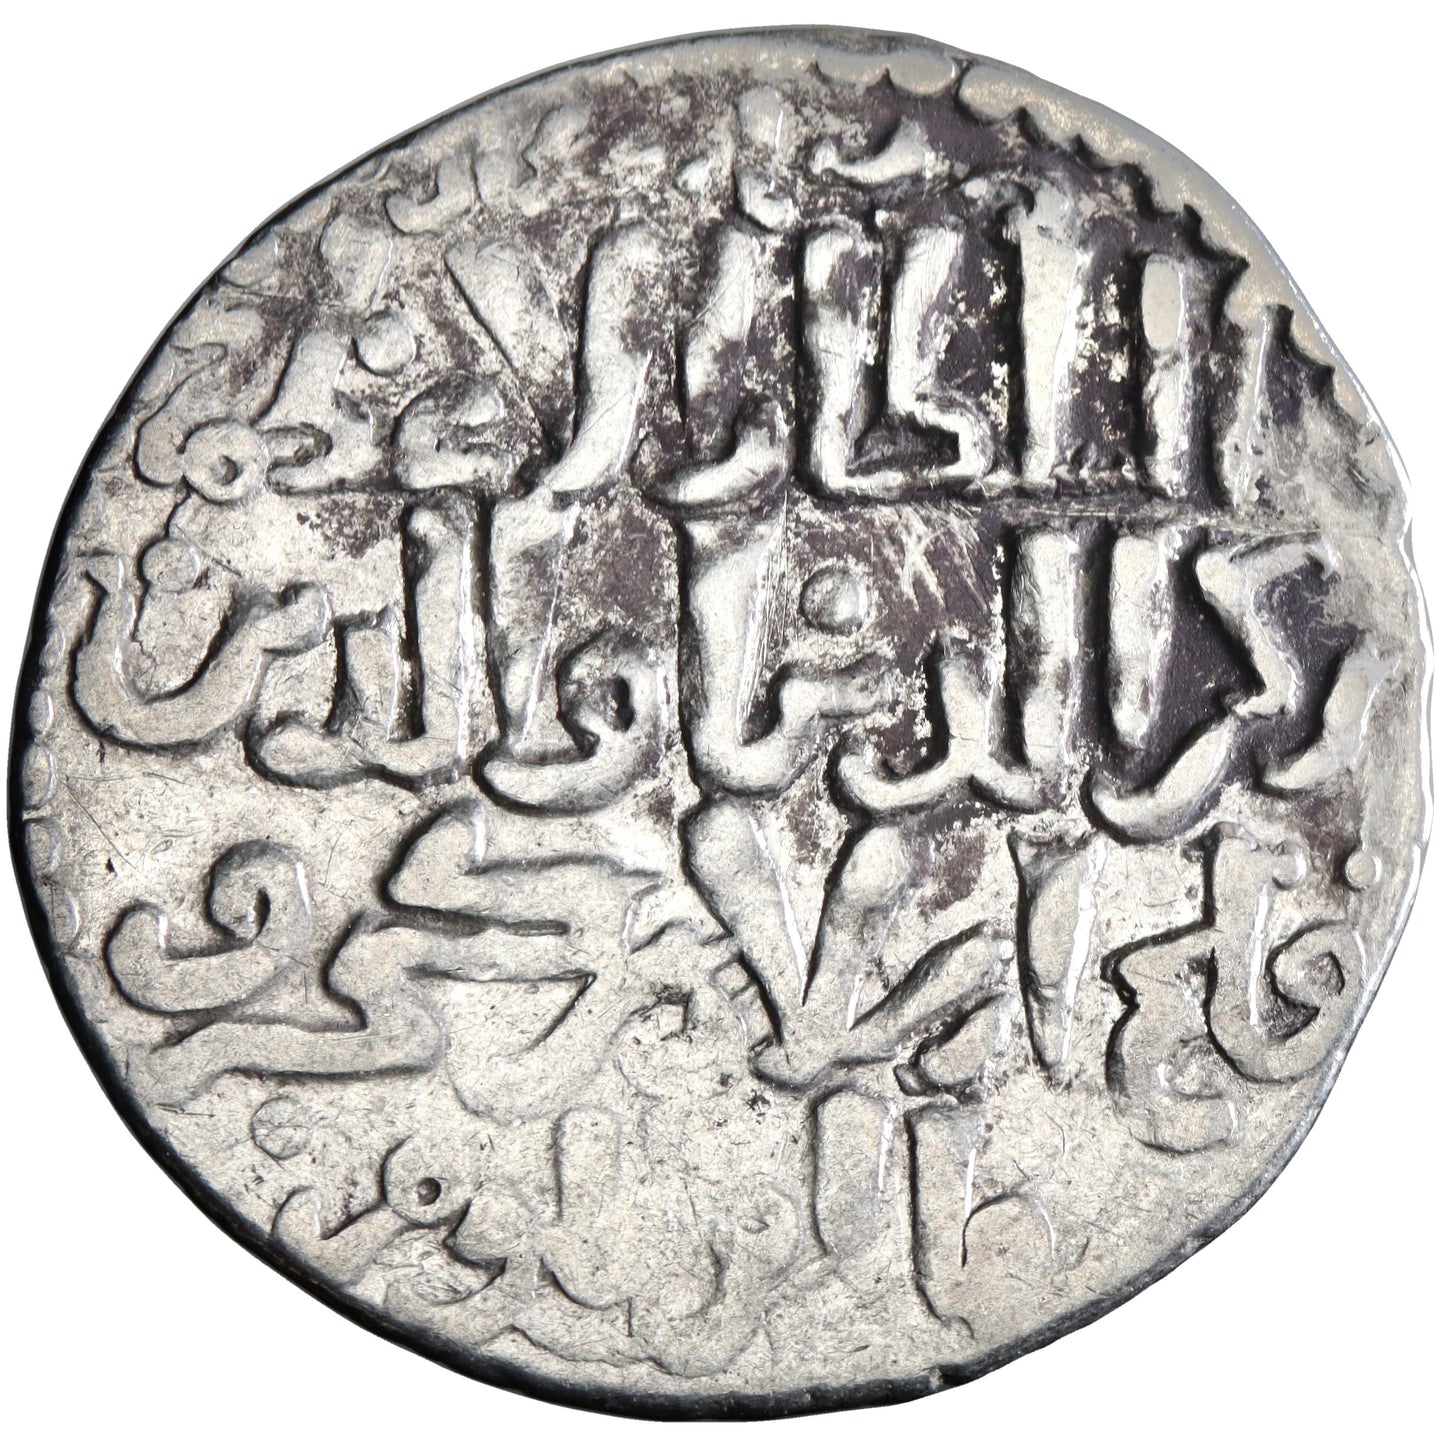 Seljuq of Rum, Qilij Arslan IV ibn Kaykhusraw, silver dirham, Erzinjan (Erzincan) mint, AH 659